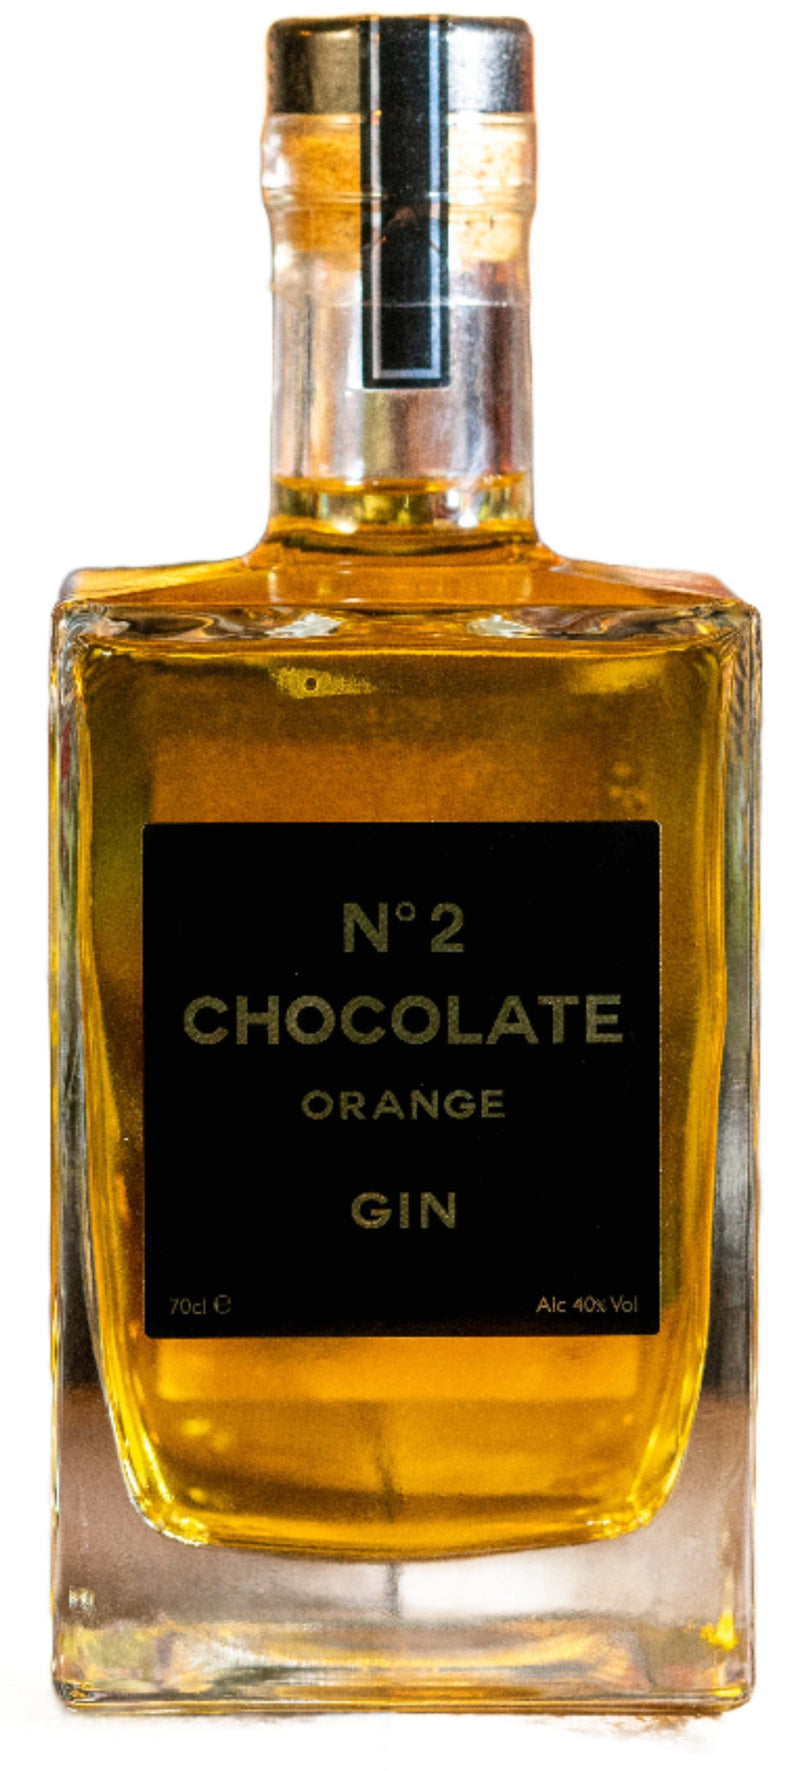 GŴYR Chocolate Gin No.2 Chocolate Orange 70cl